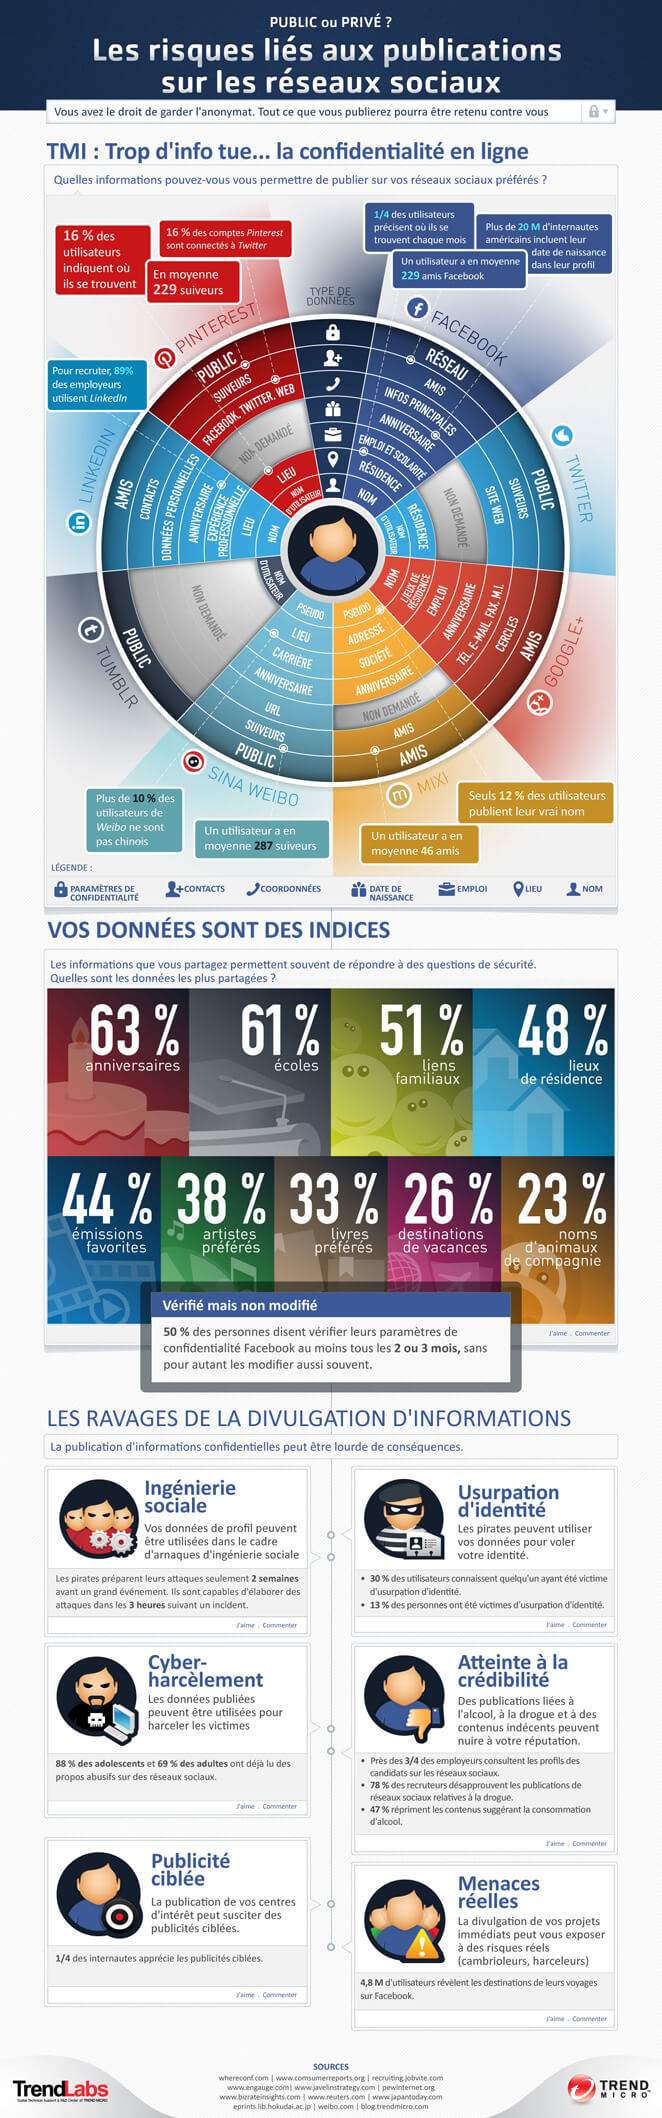 infographic-risk-of-posting-in-social-networks-fr